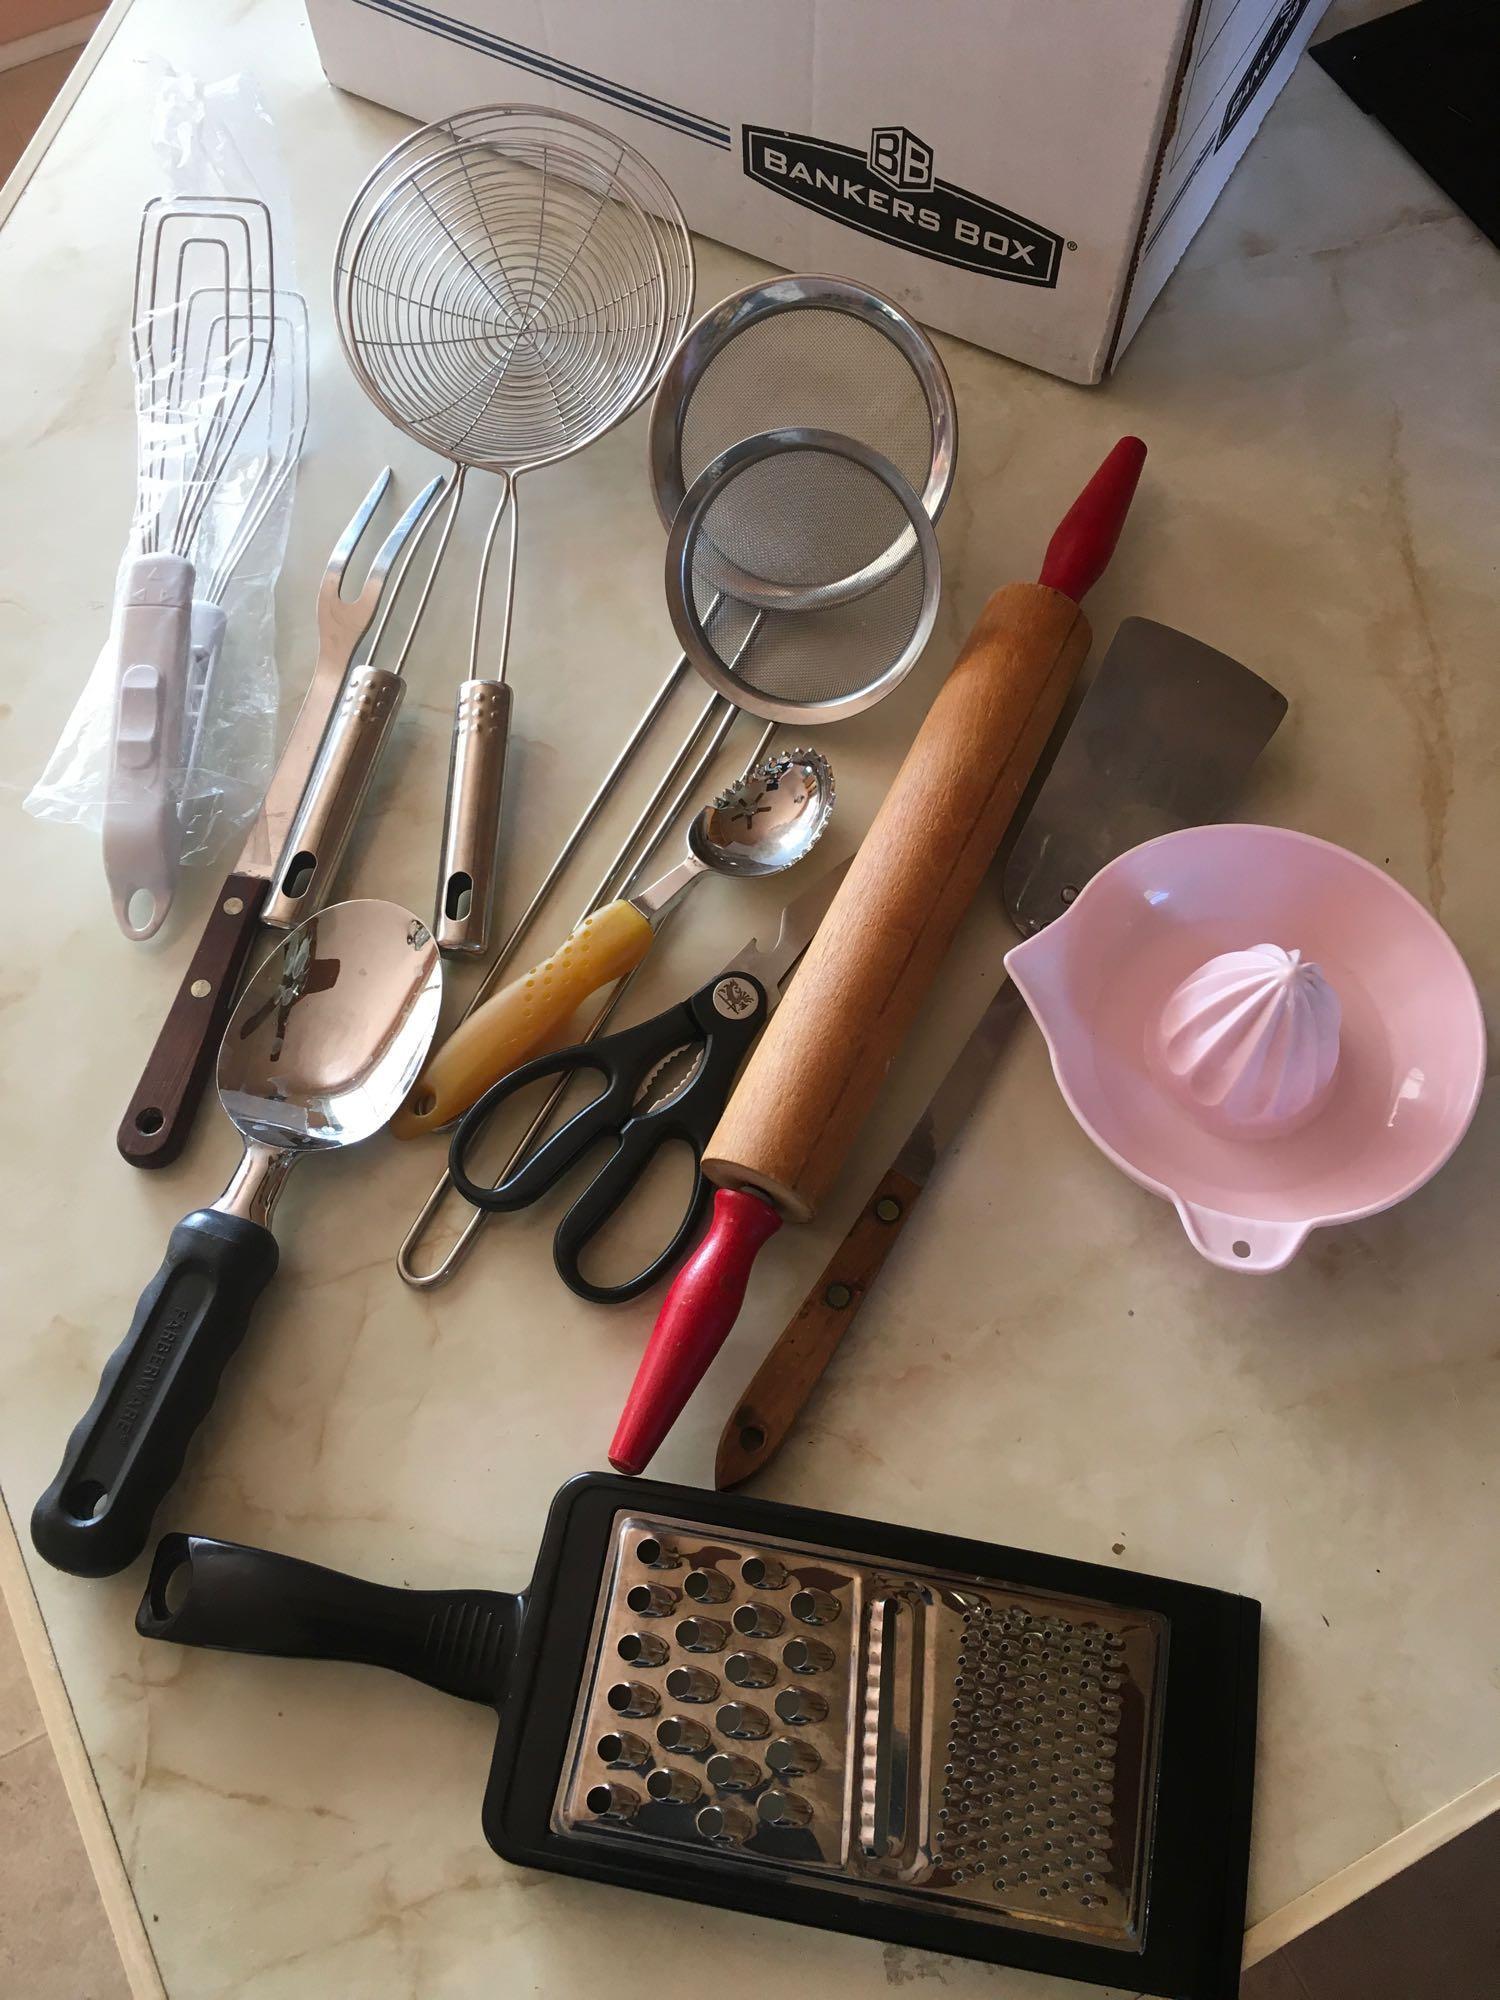 Lot. Assorted kitchen utensils